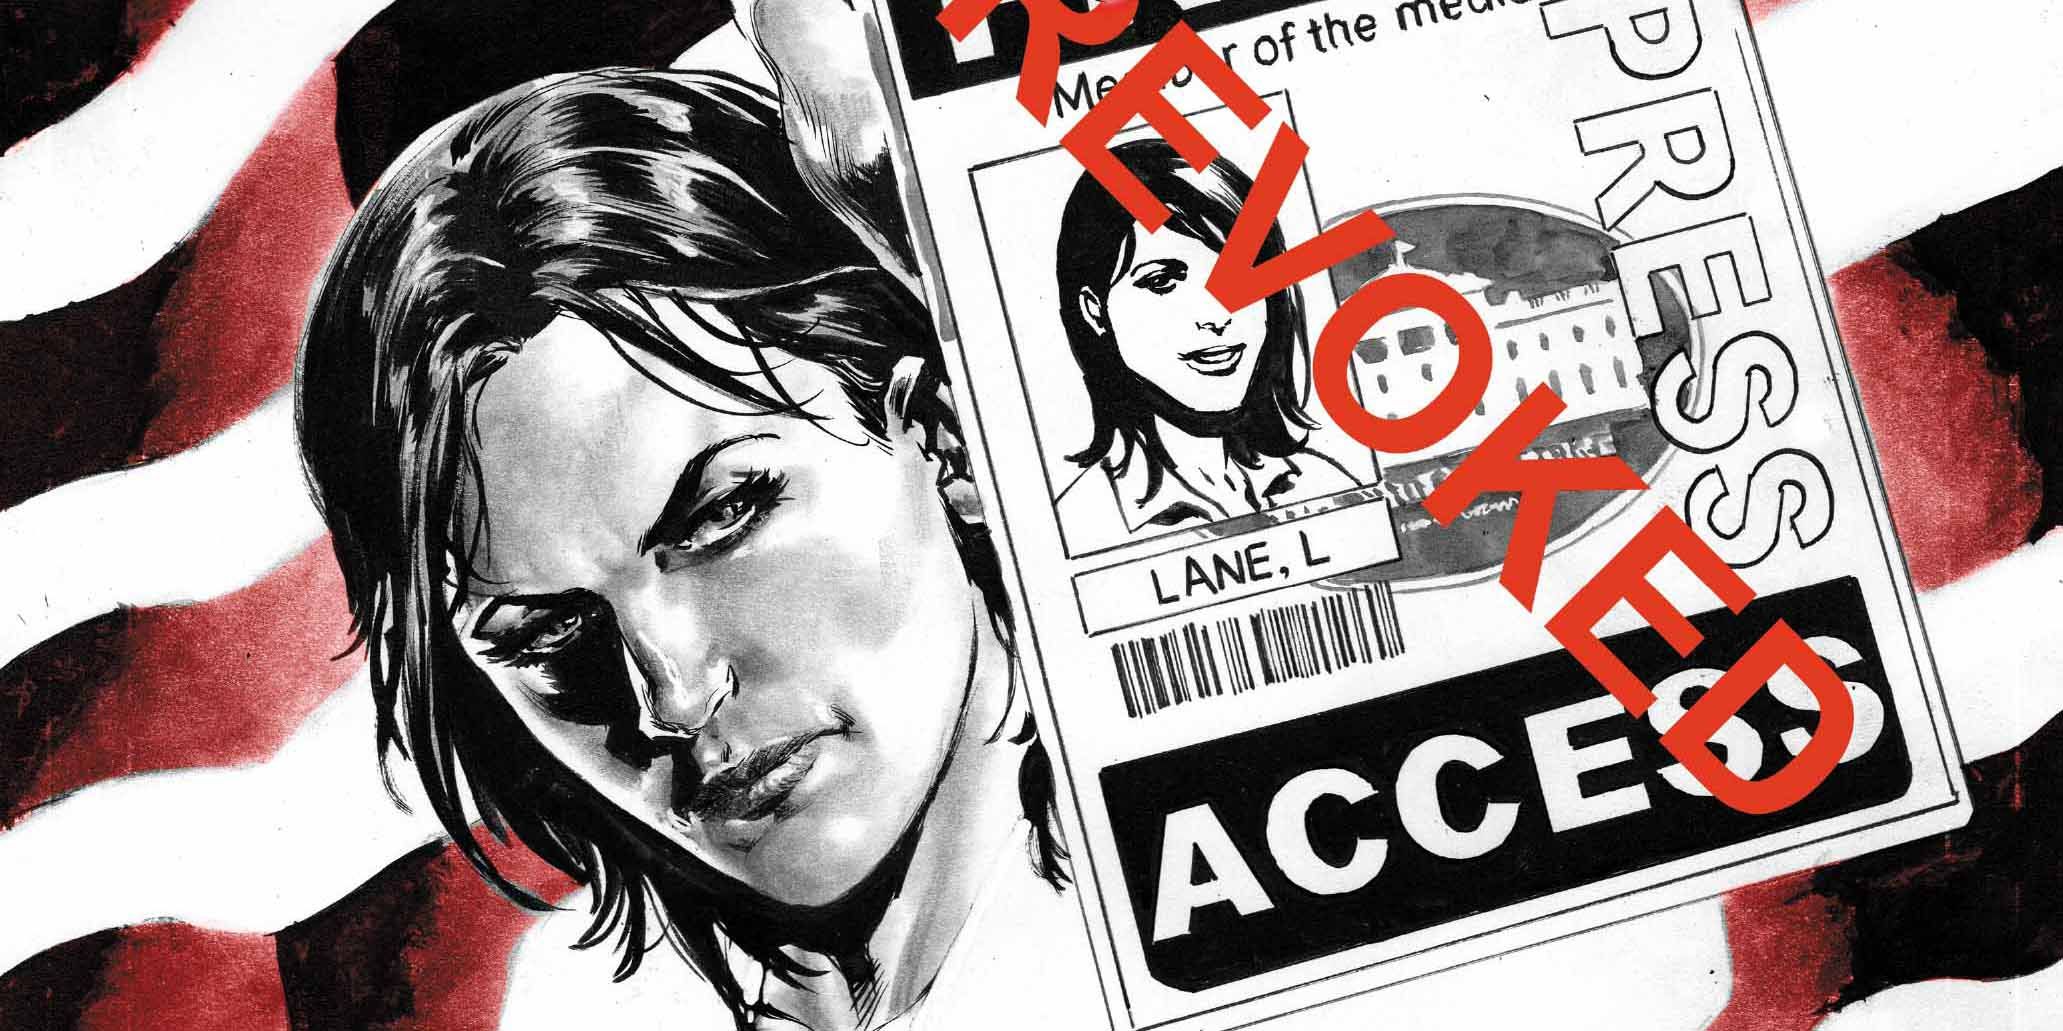 Lois lane's reporter status is revoked in DC Comics